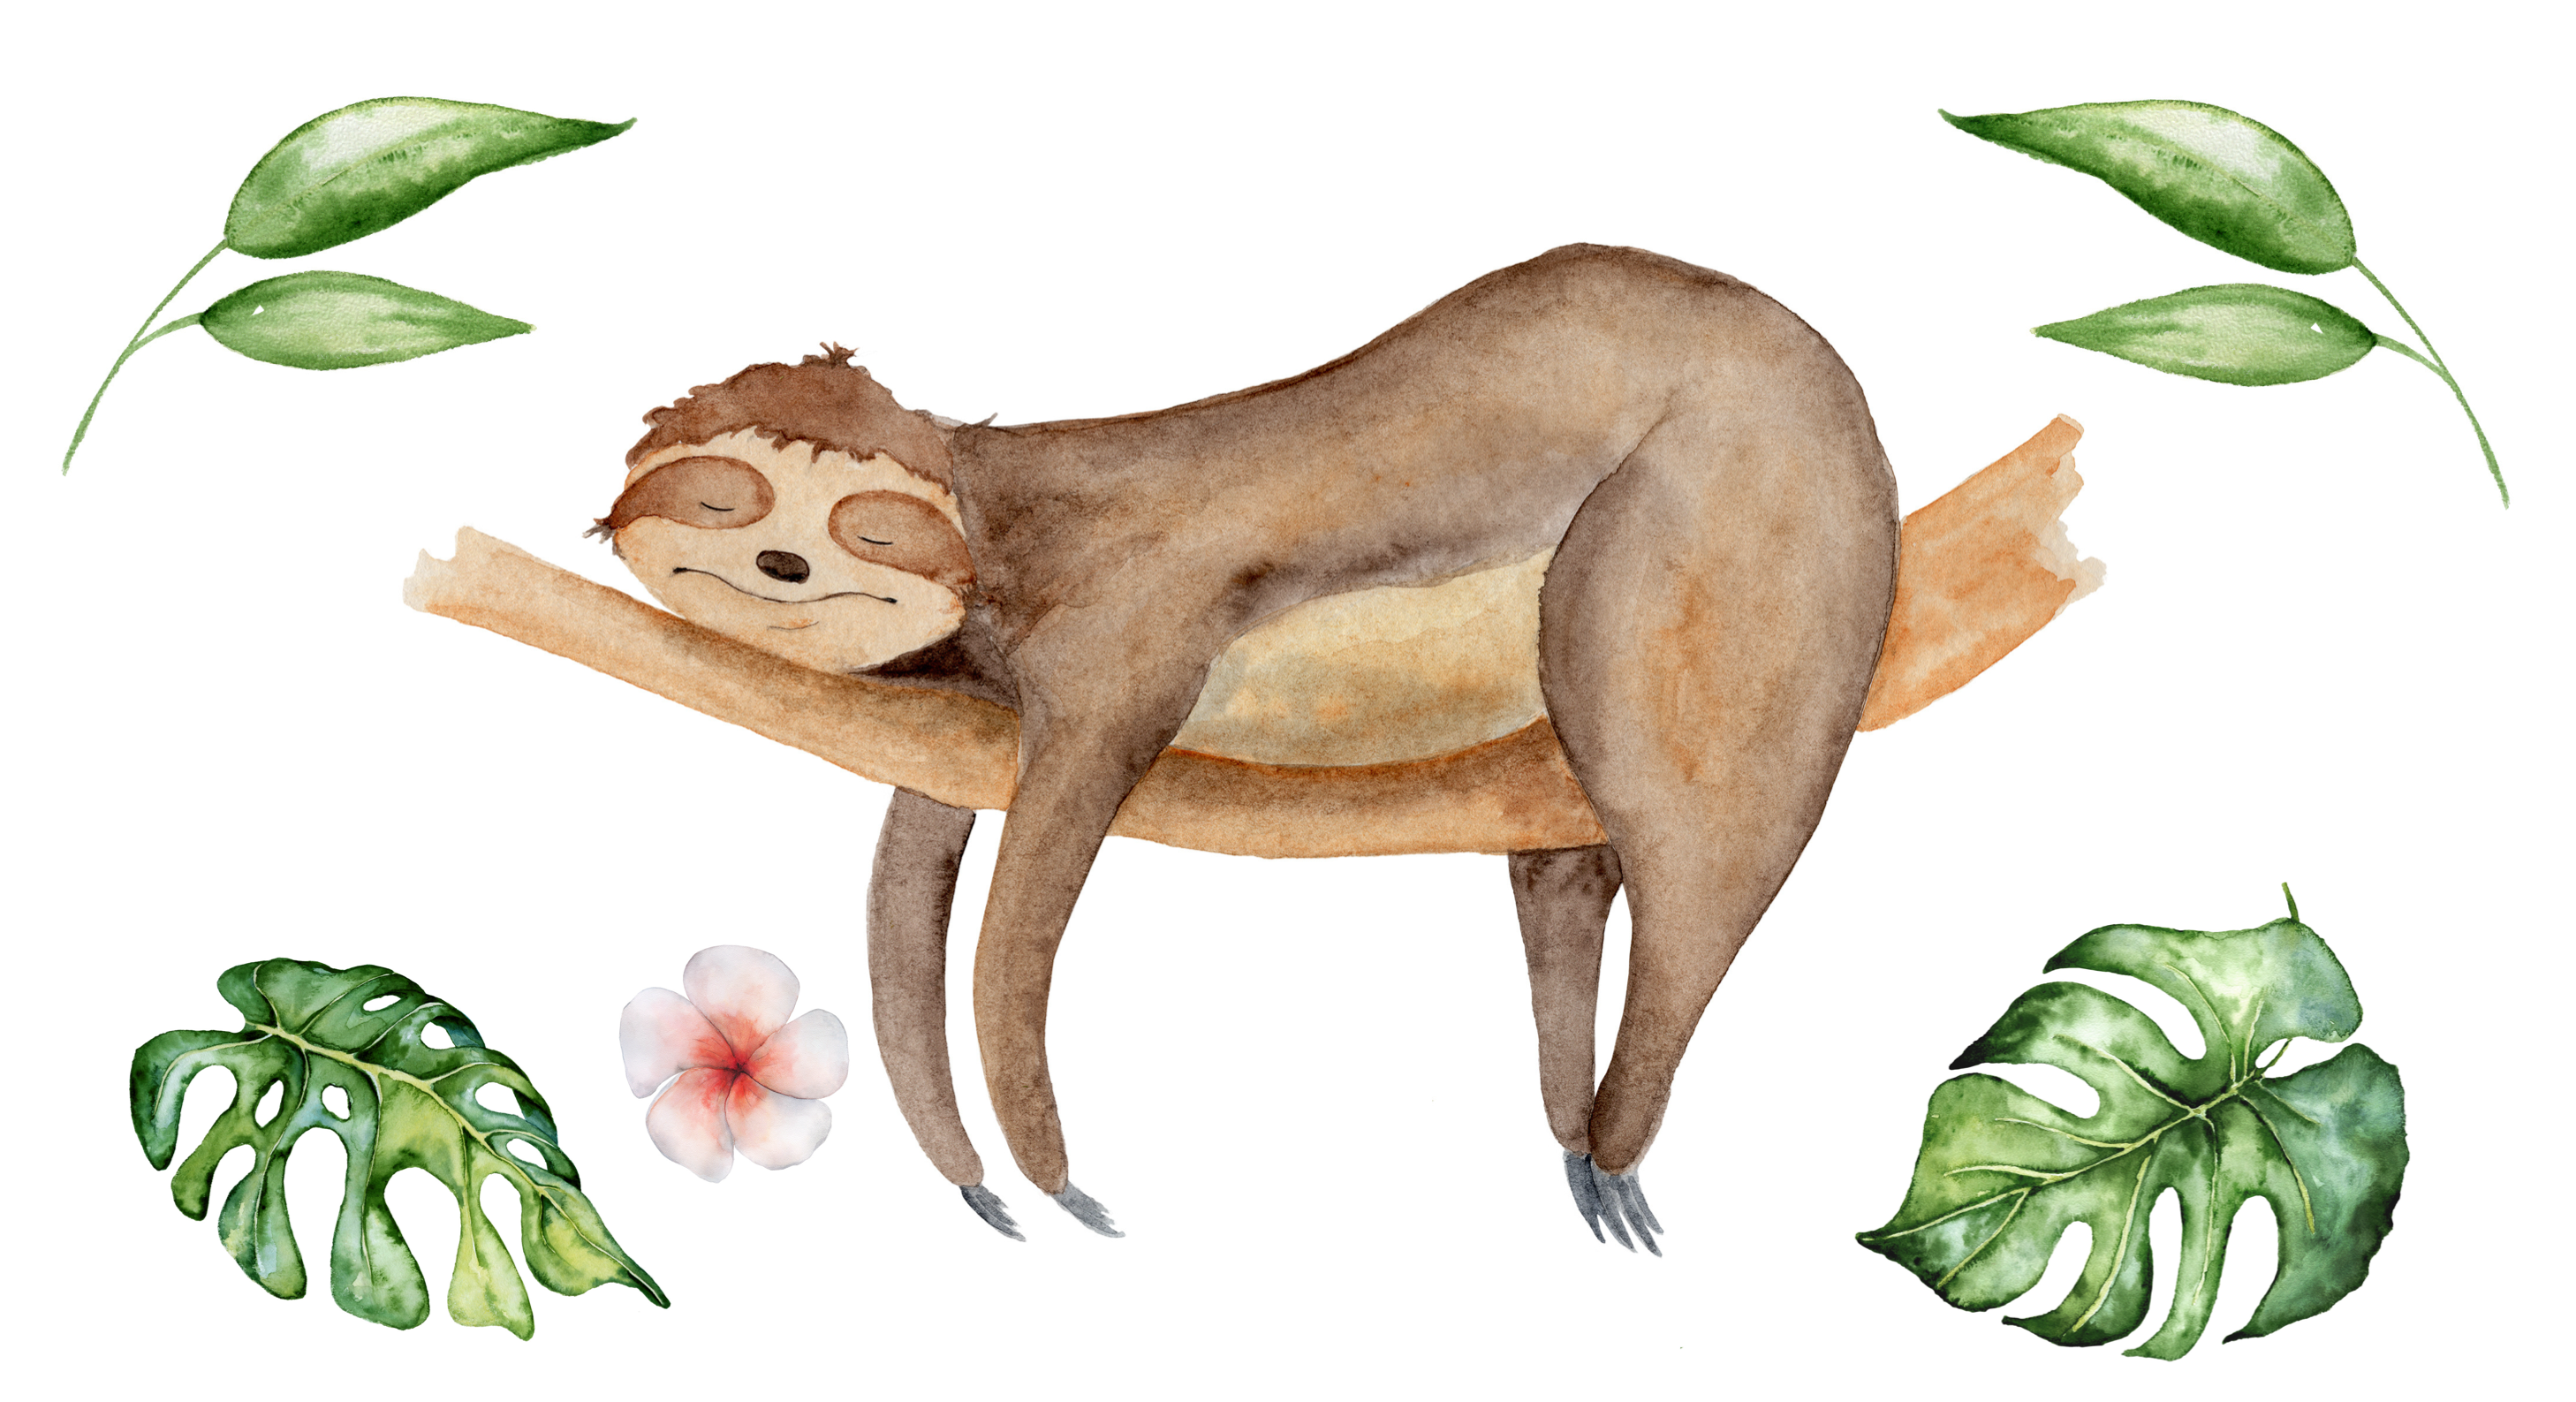 sloth sleeps on branch